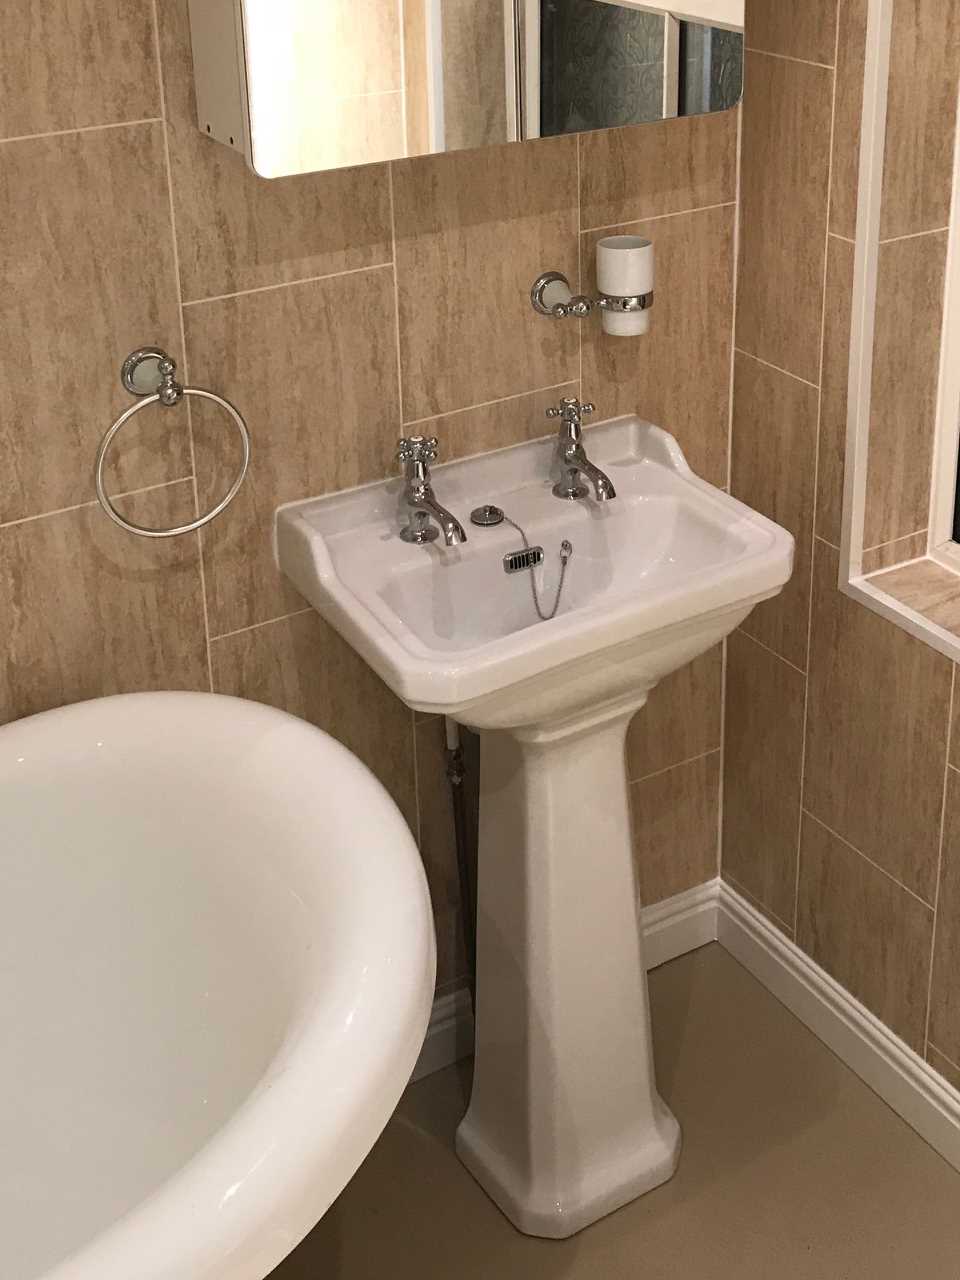 Pedestal sink unit installed in bathroom Designed for All Family